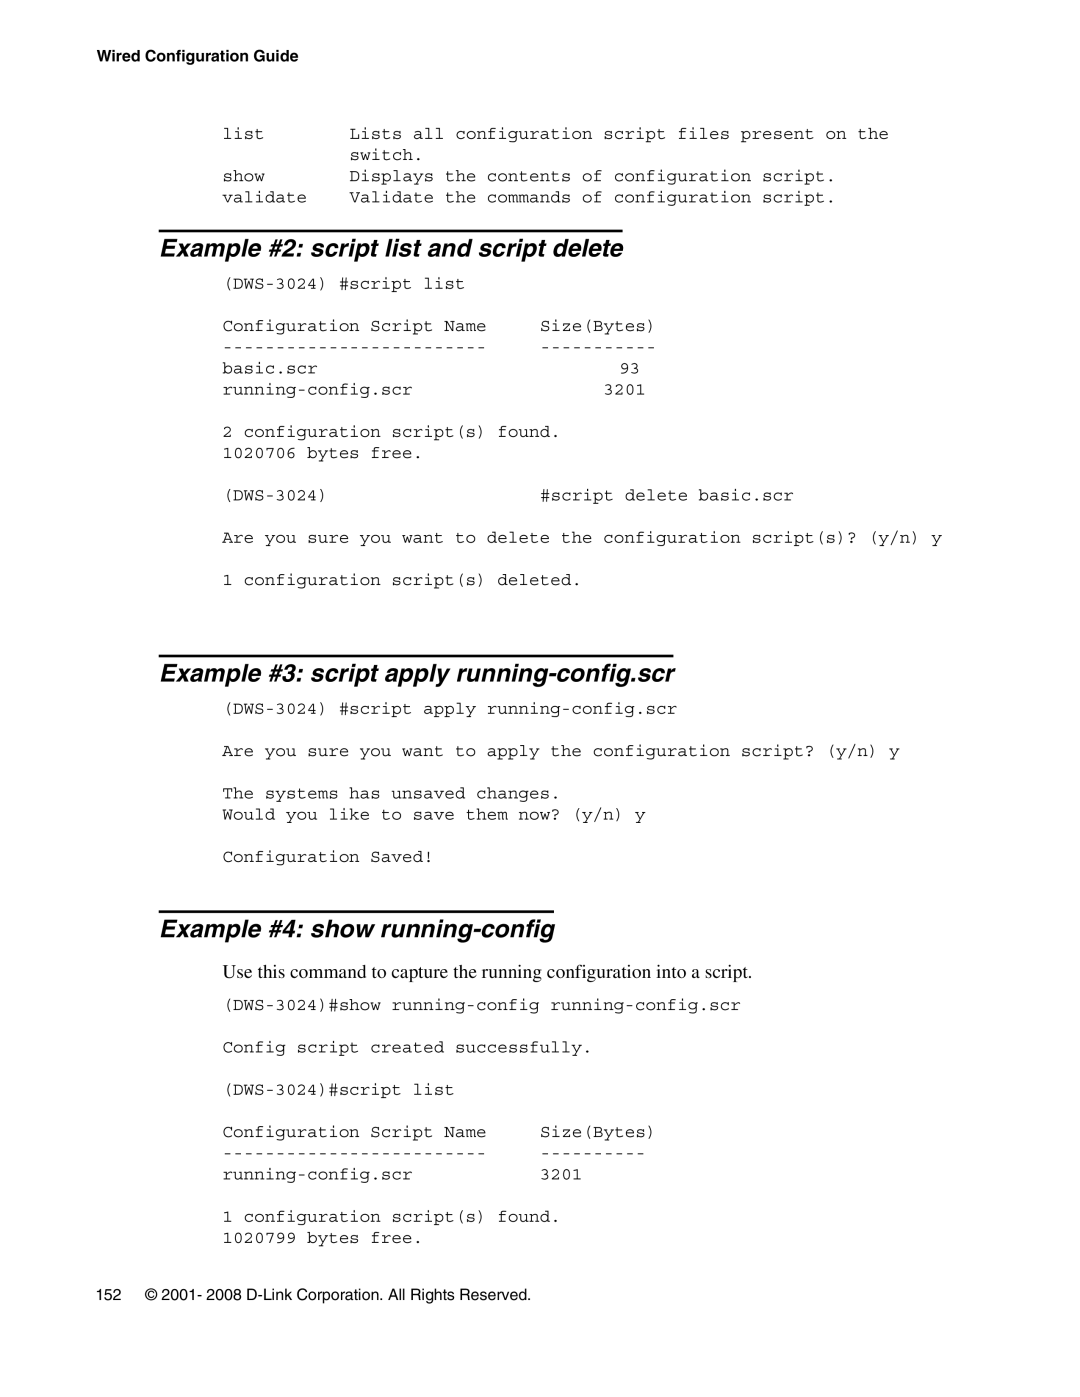 D-Link DWS-3000 manual Example #2 script list and script delete, Example #3 script apply running-config.scr 